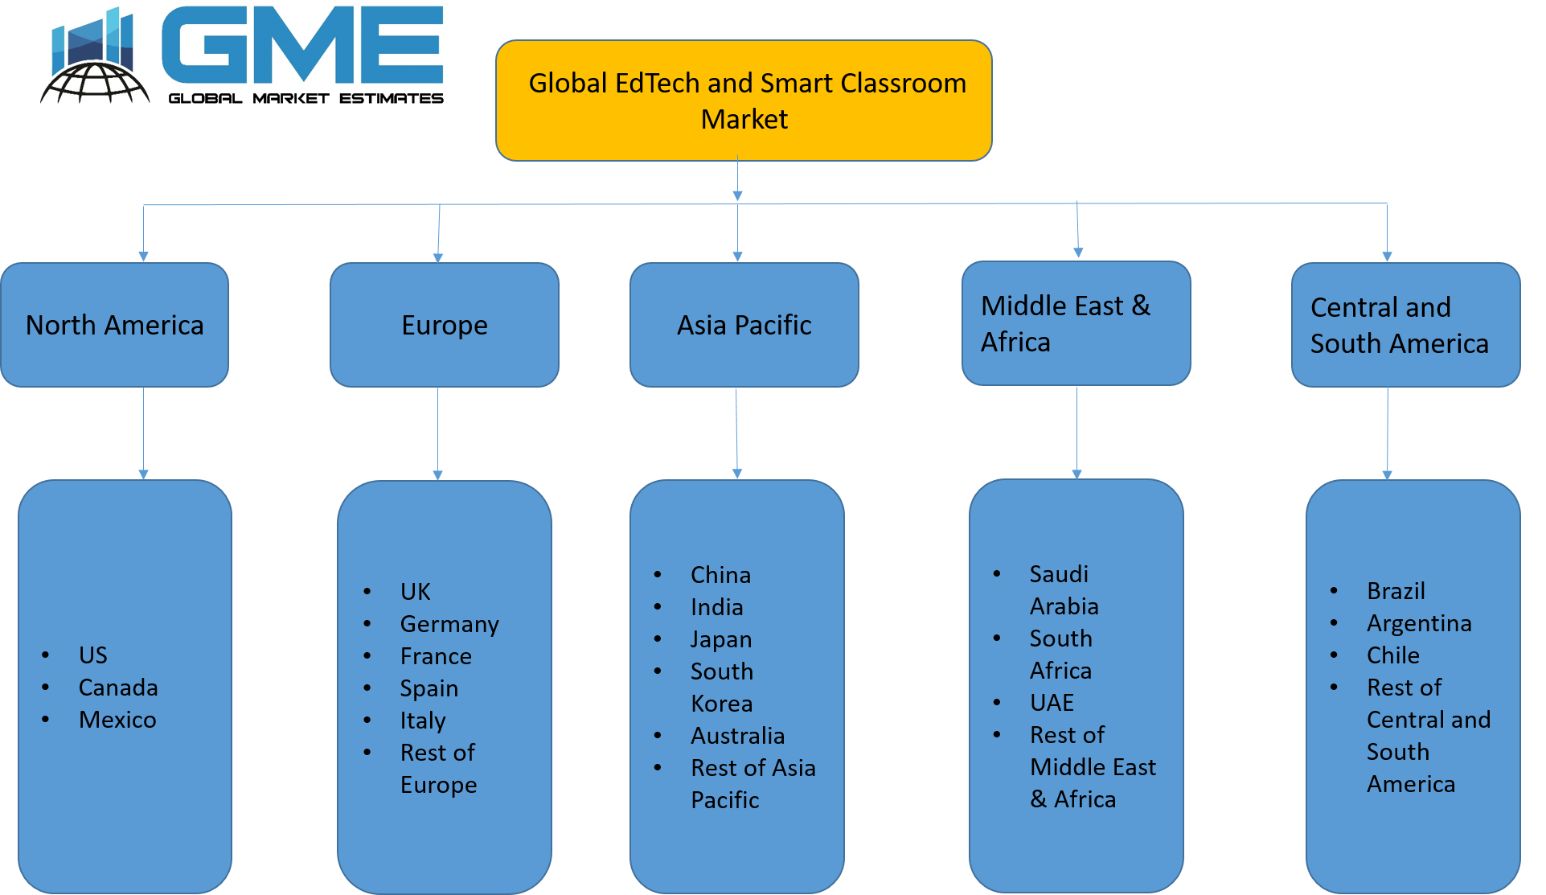 Global EdTech and Smart Classroom Market - Regional Analysis